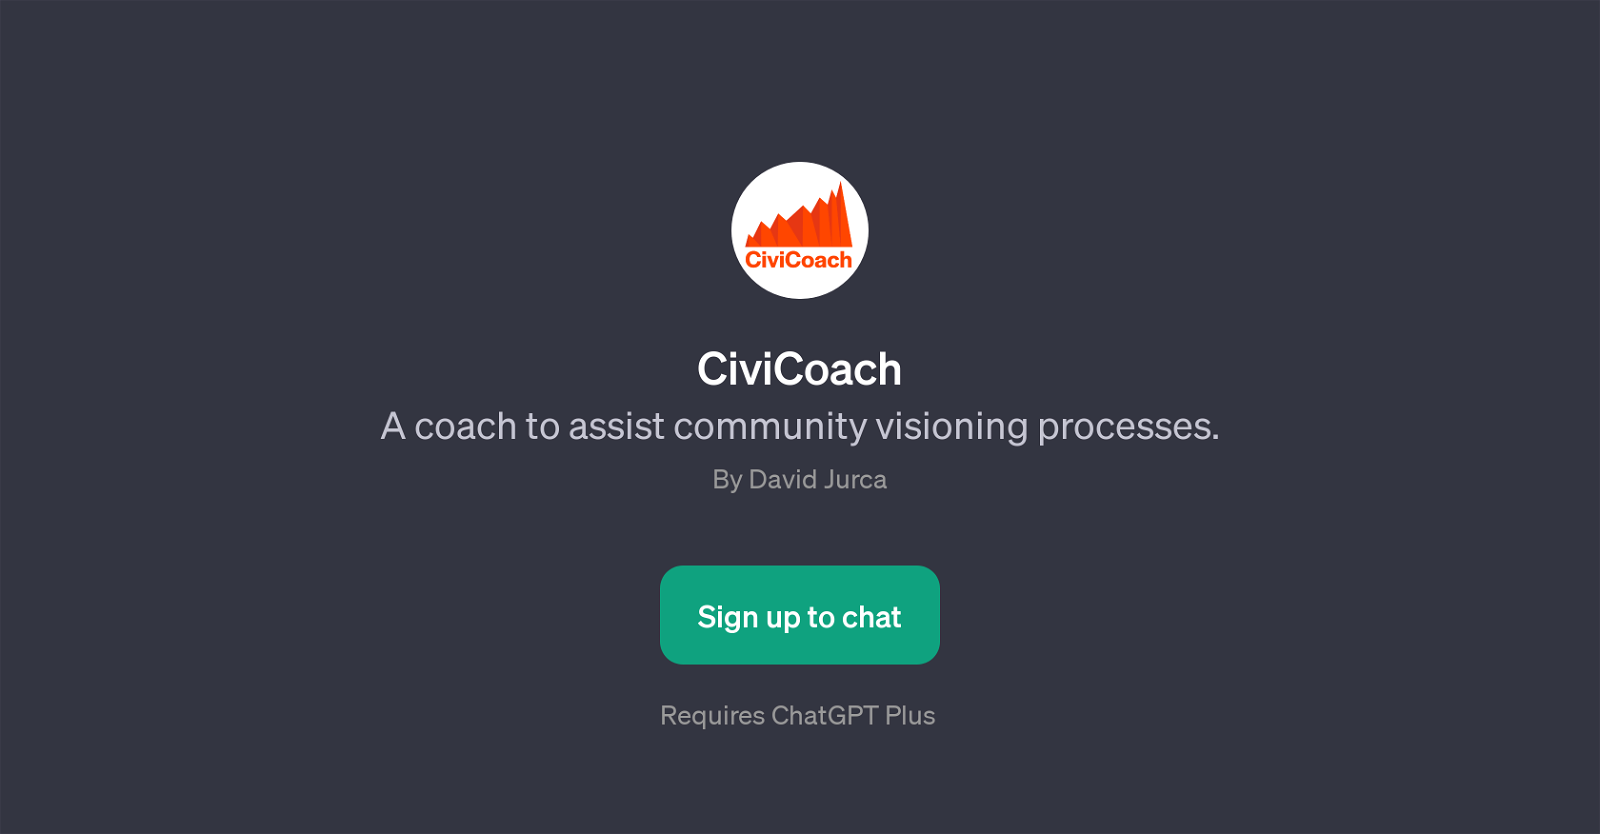 CiviCoach website